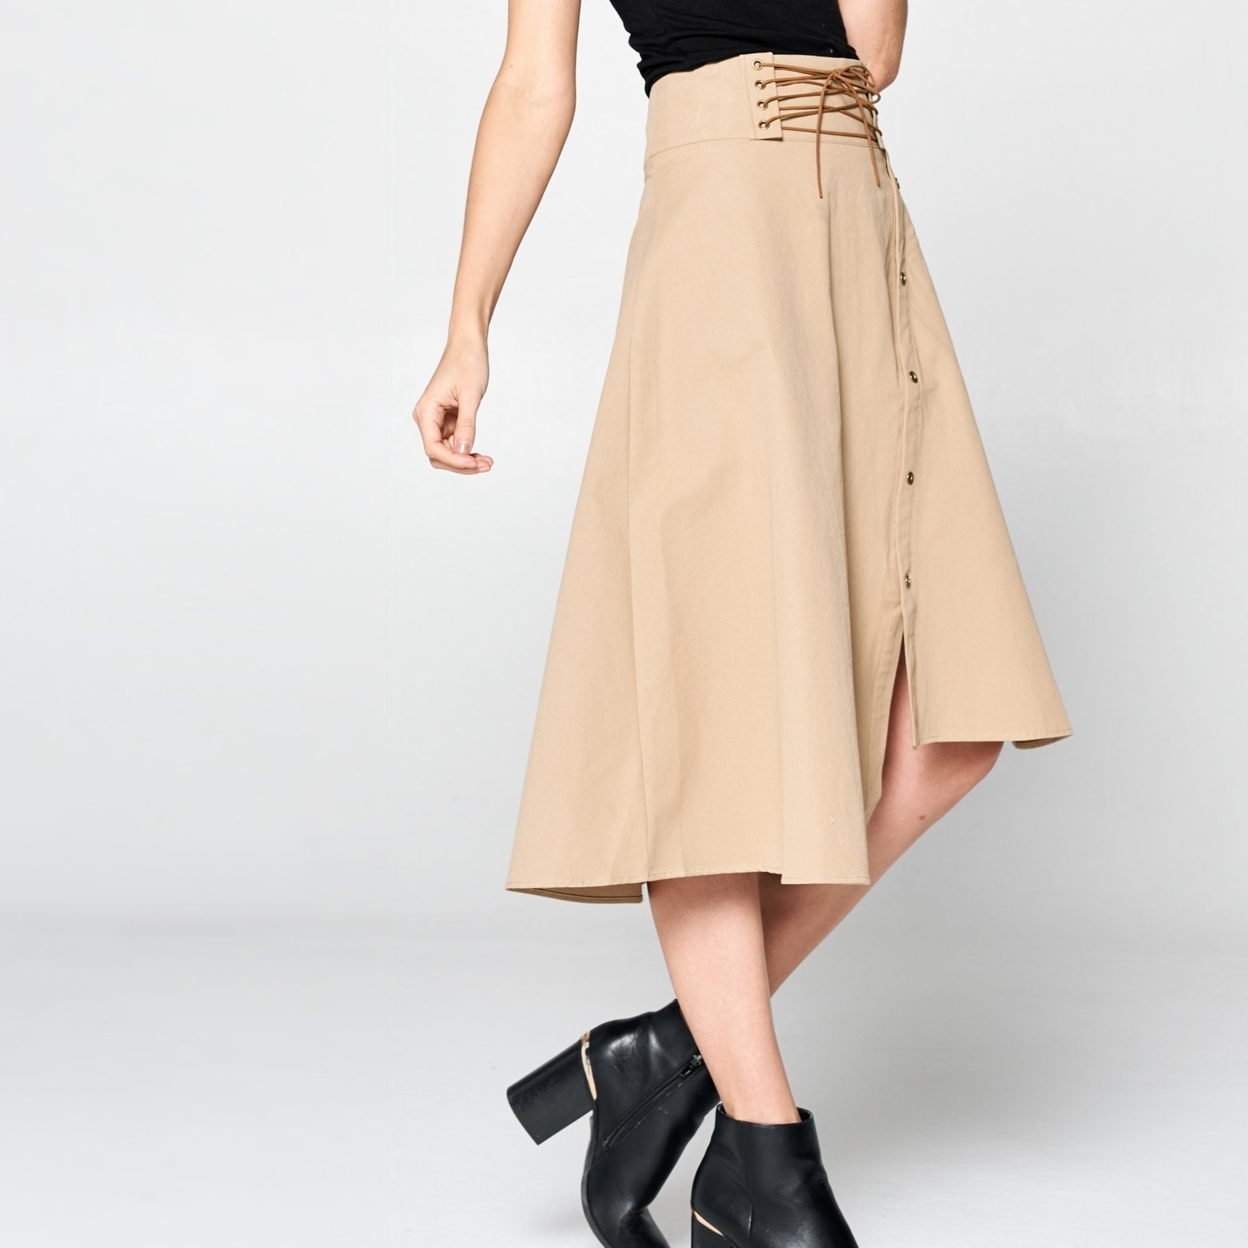 Uneven Cotton Twill Skirt - Olive, Medium (8-10)